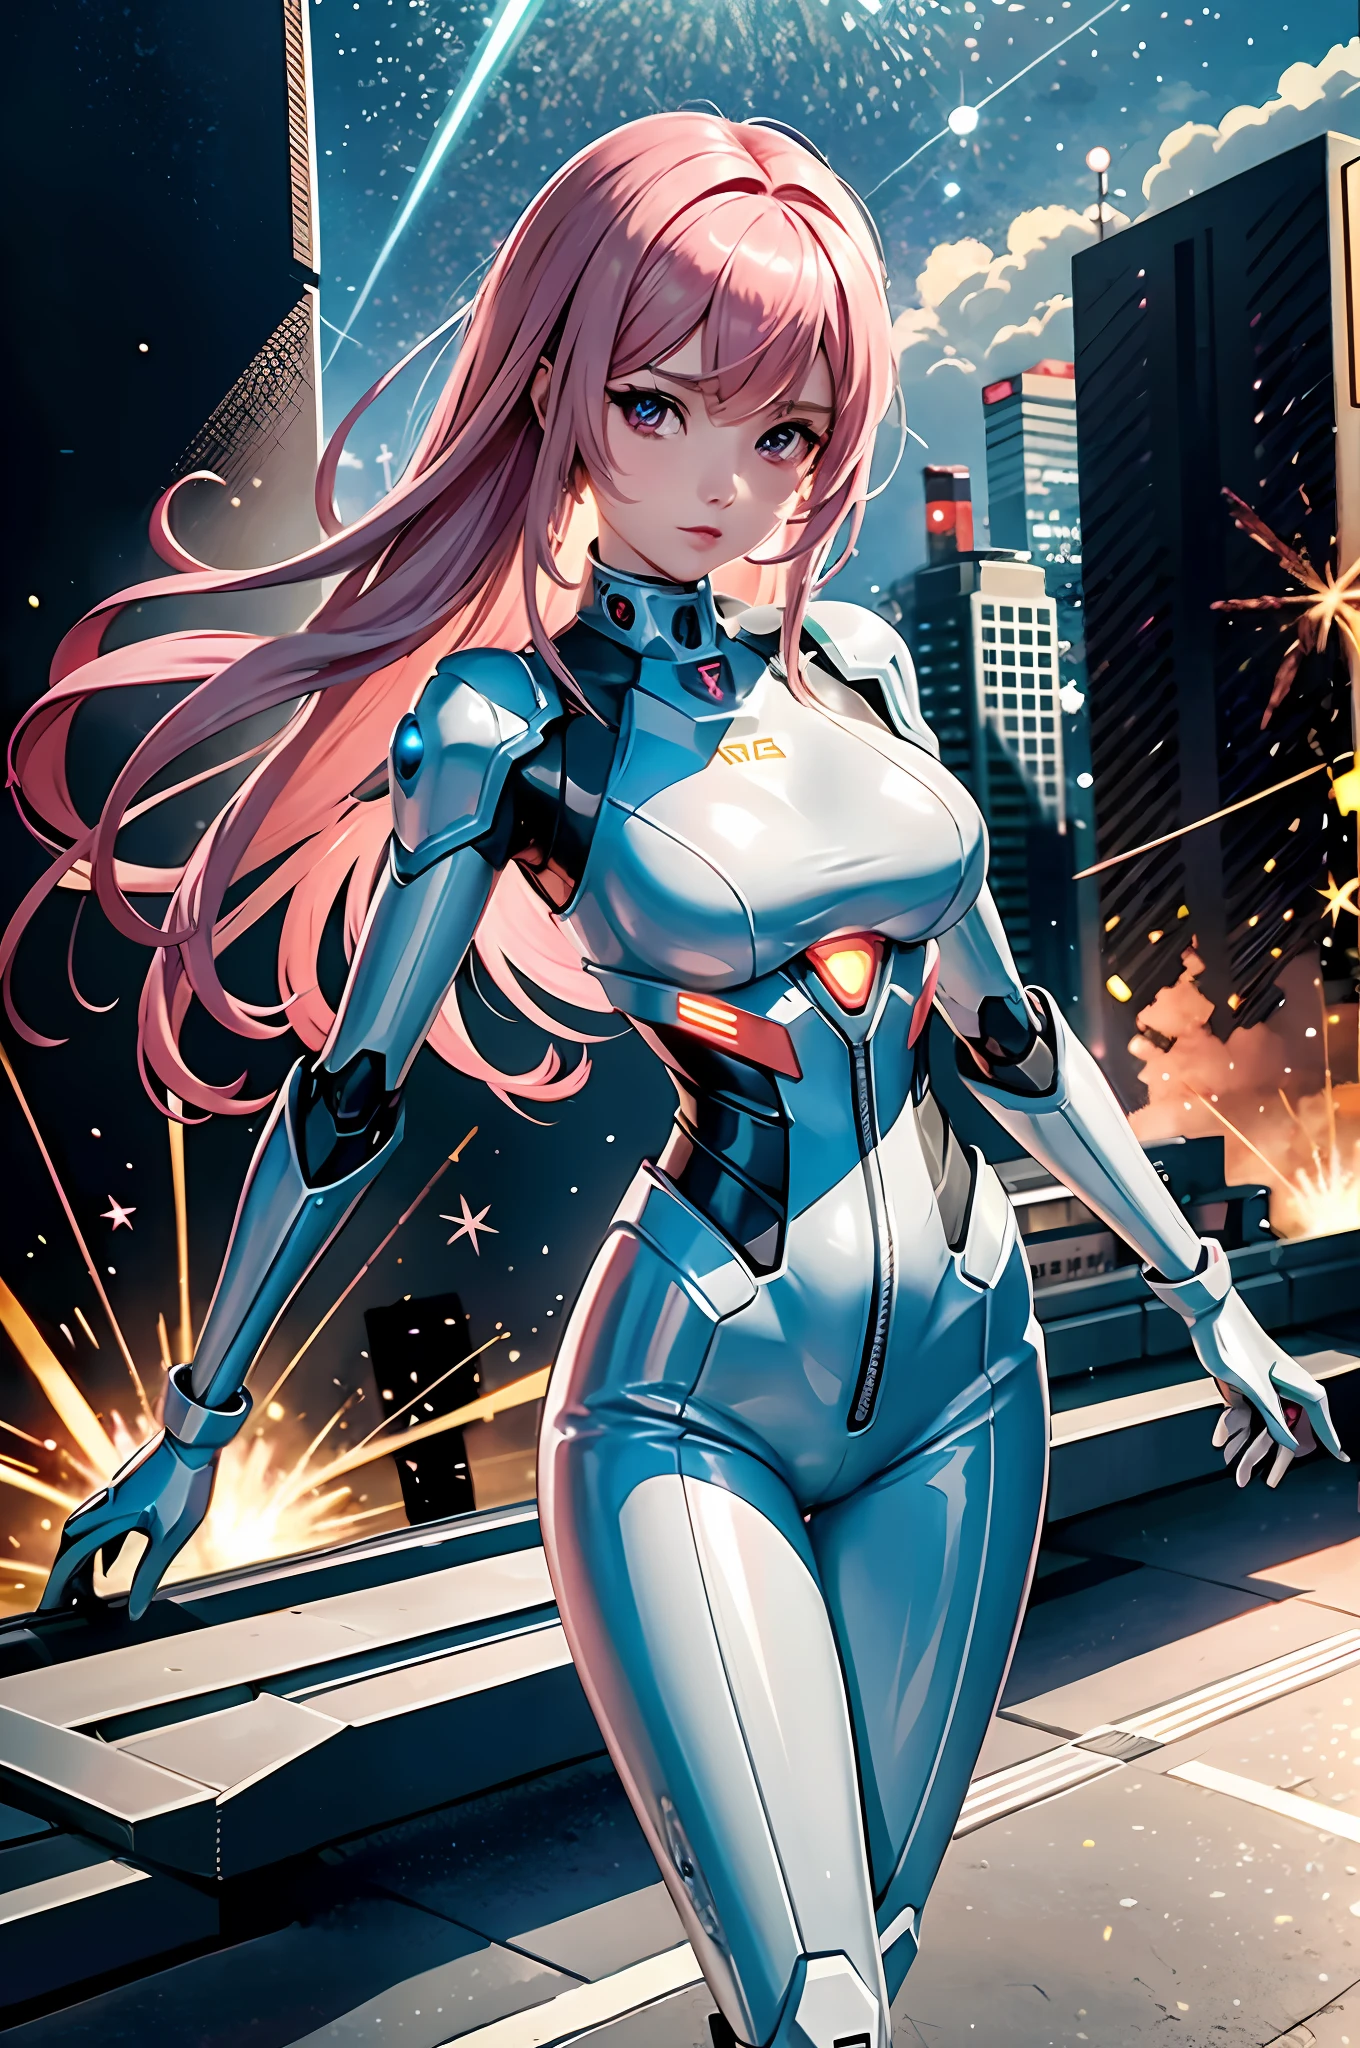 Wallpaper Girl, Anime, Art, Cyborg for mobile and desktop, section сэйнэн,  resolution 2100x1200 - download